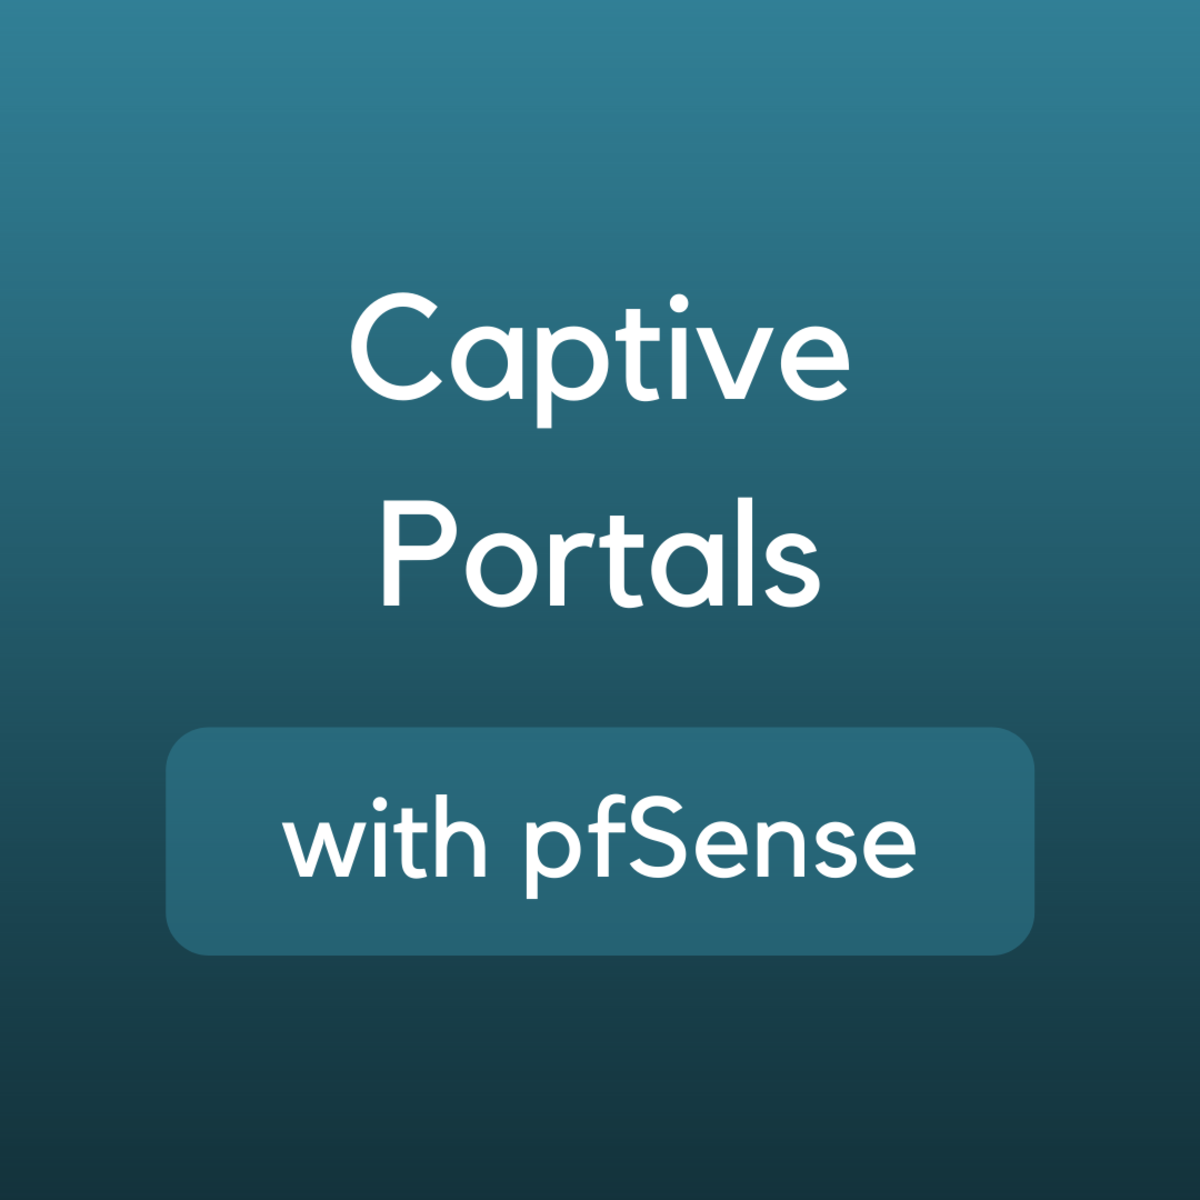 How to Set Up a Captive Portal Using pfSense